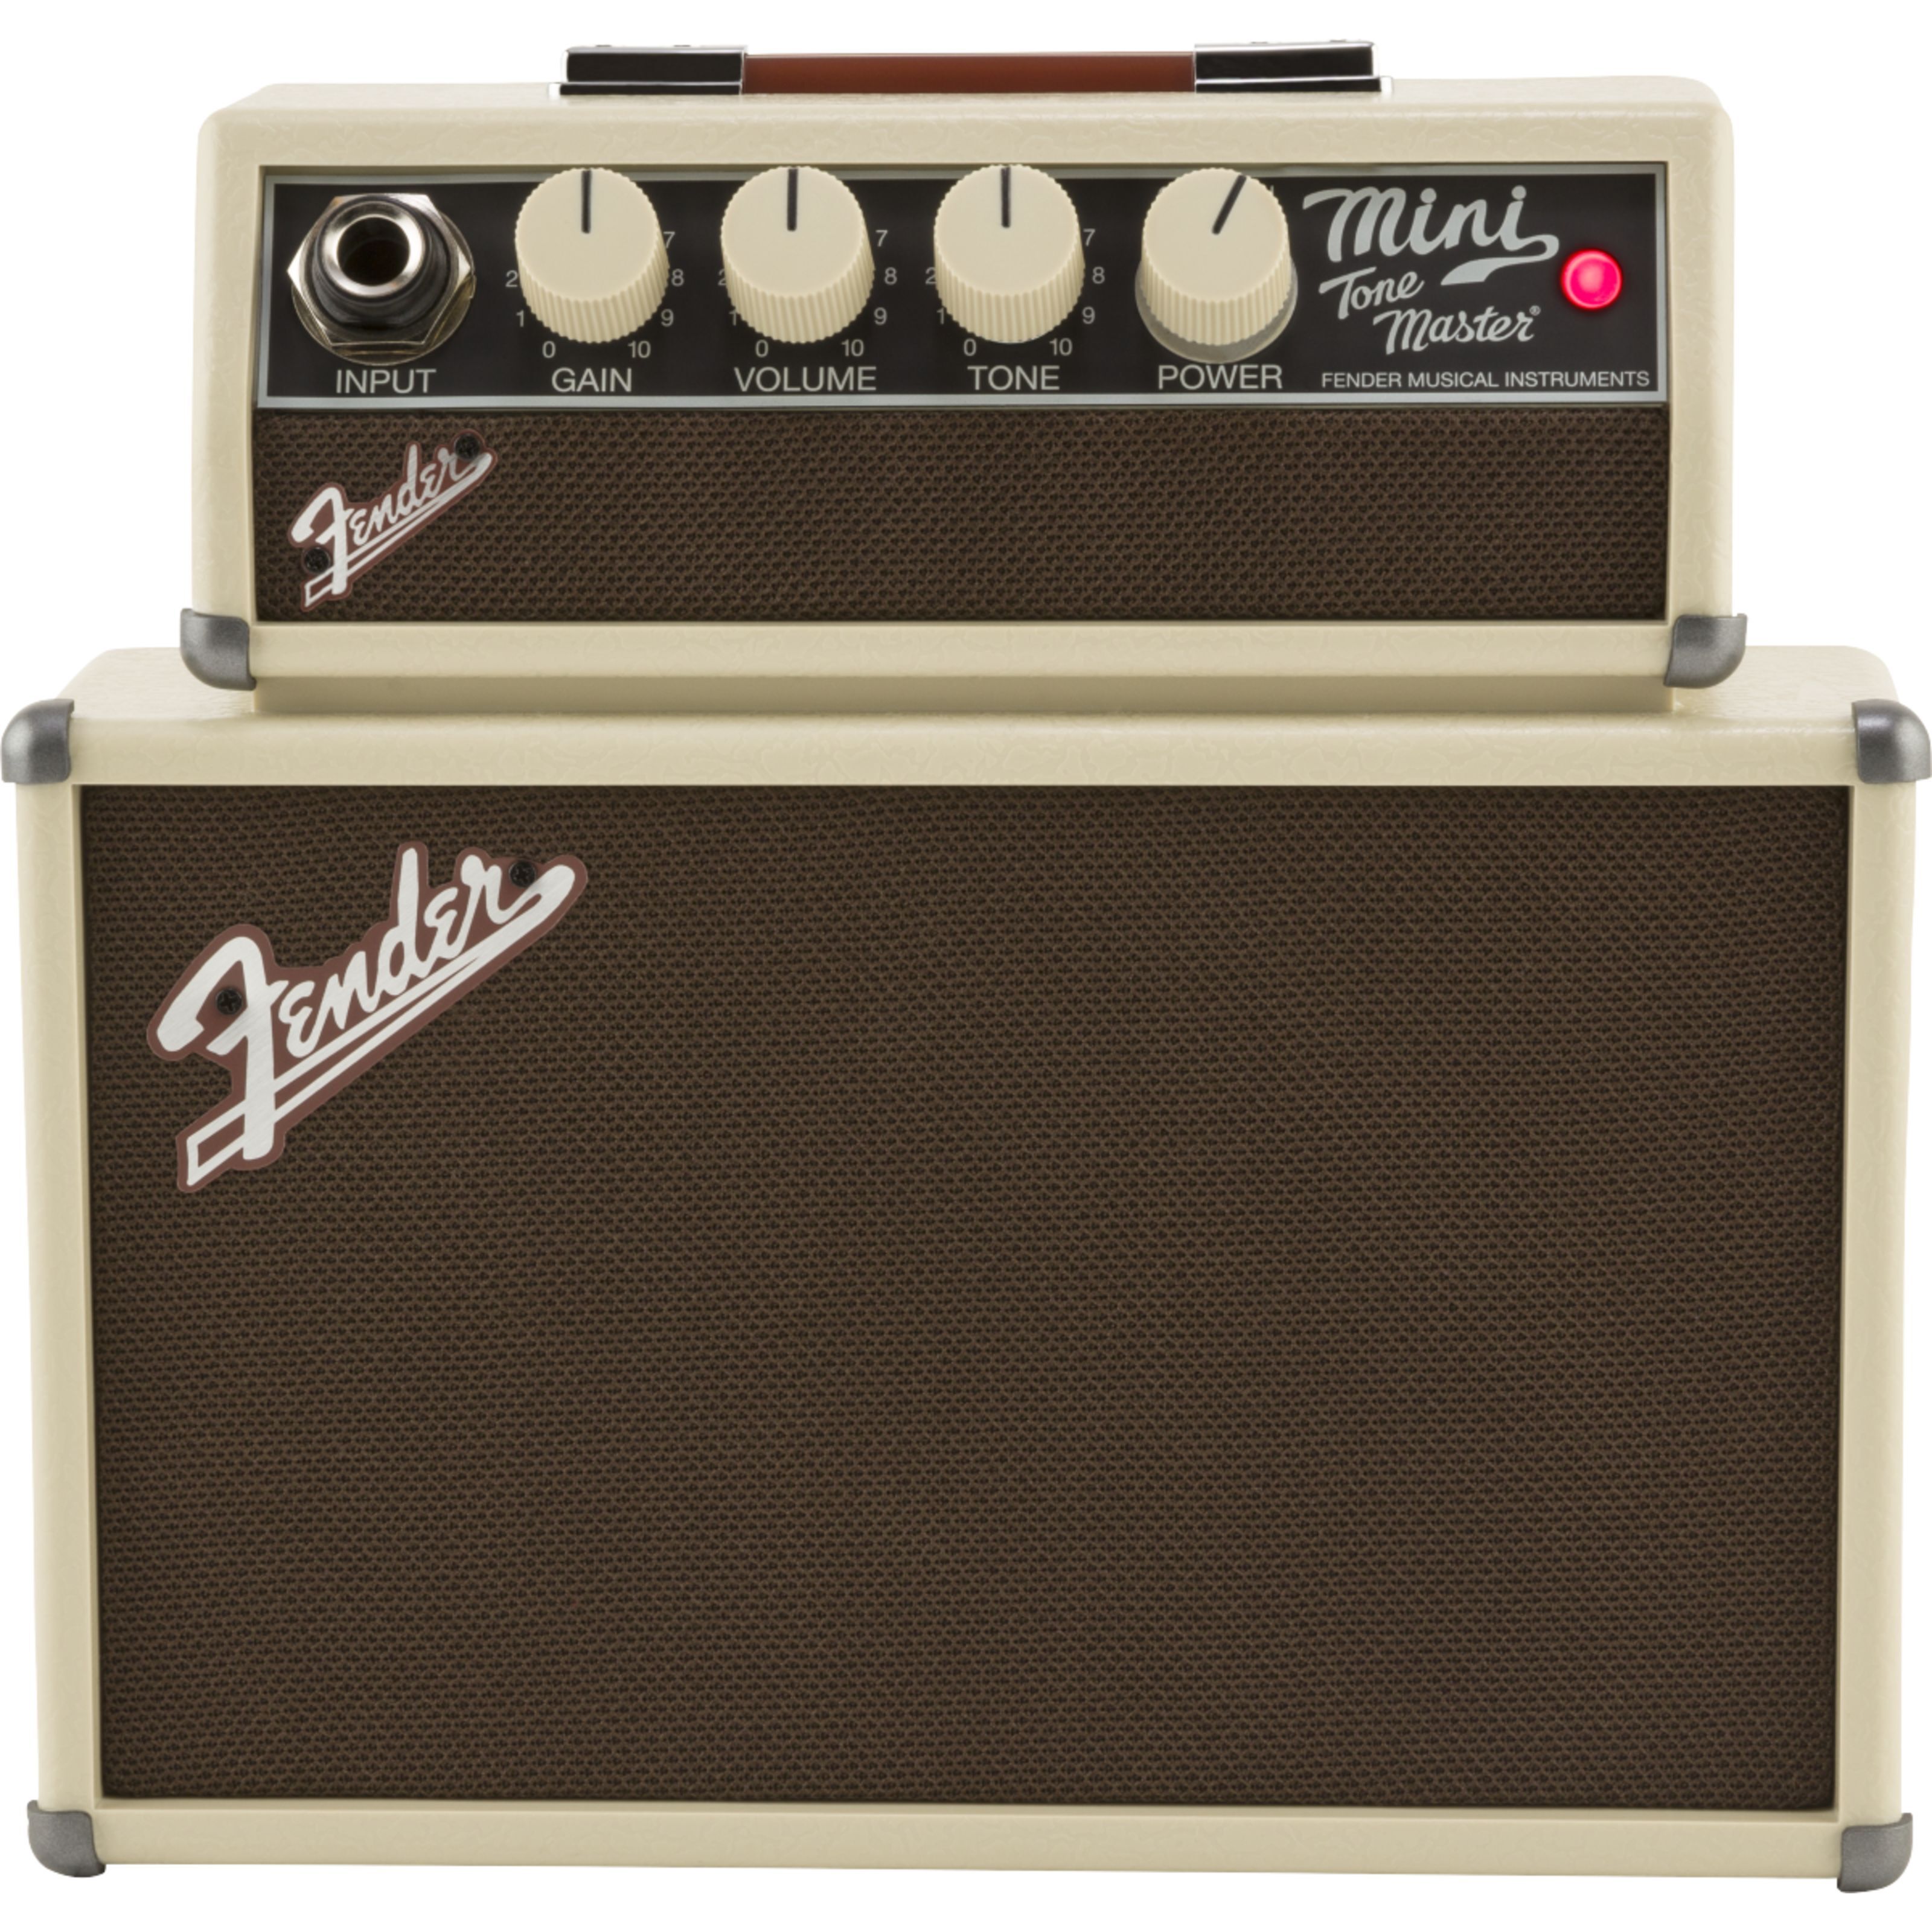 Fender Mini Tone Master Amplifier - leichter Combo Verstärker für E-Gitarre